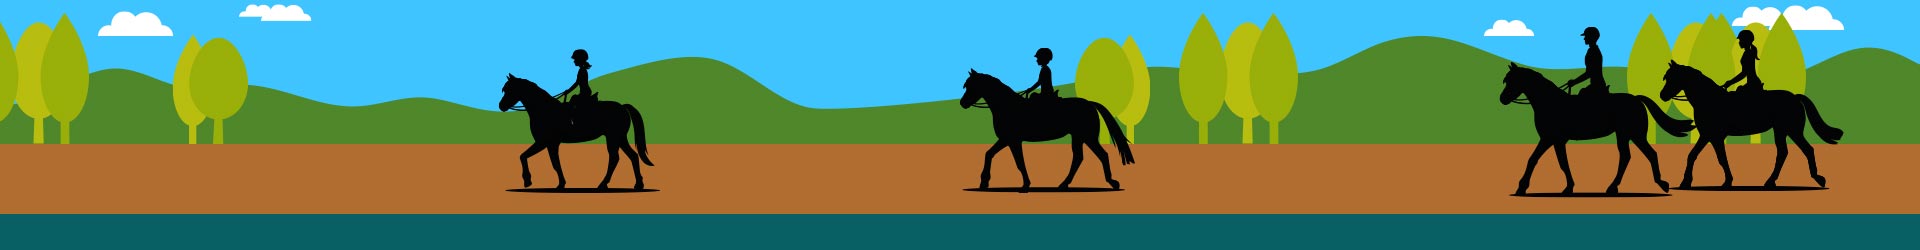 equestrian insurance